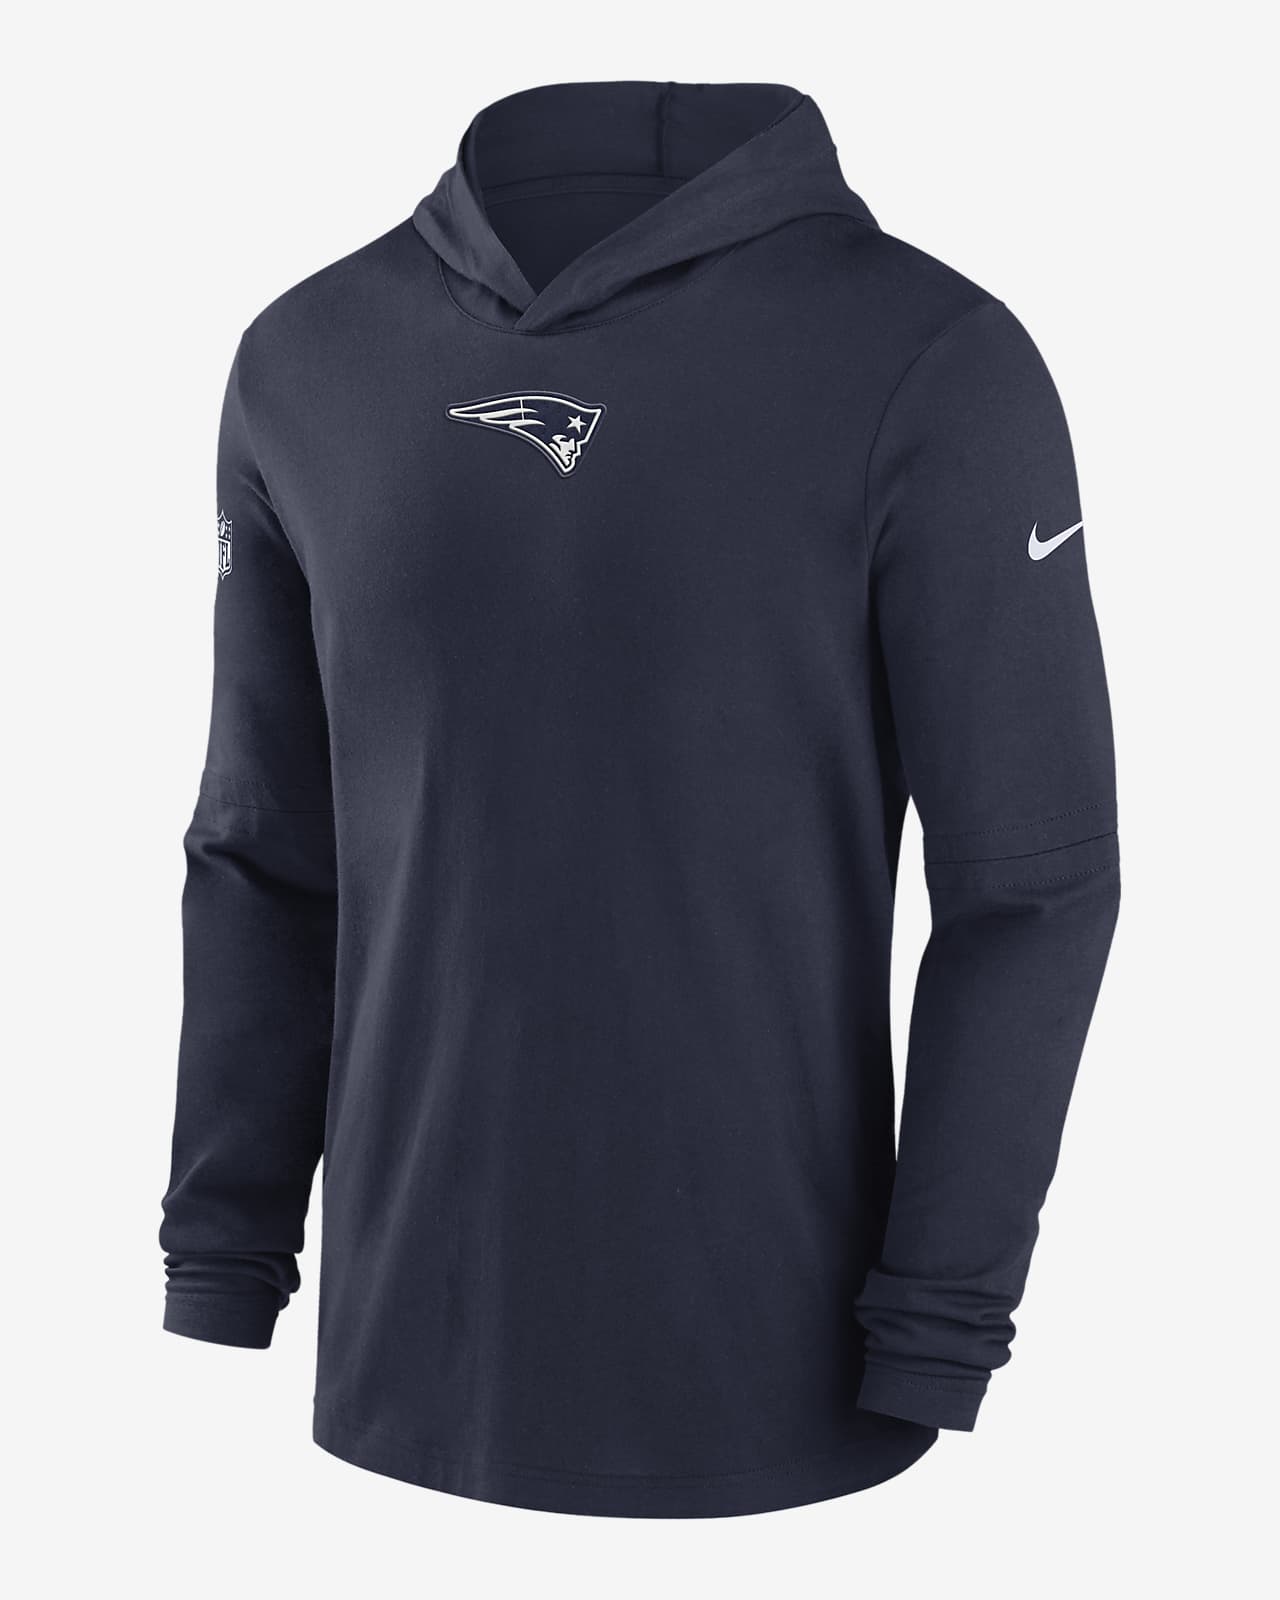 New England Patriots Sideline Men’s Nike Dri-FIT NFL Long-Sleeve Hooded Top